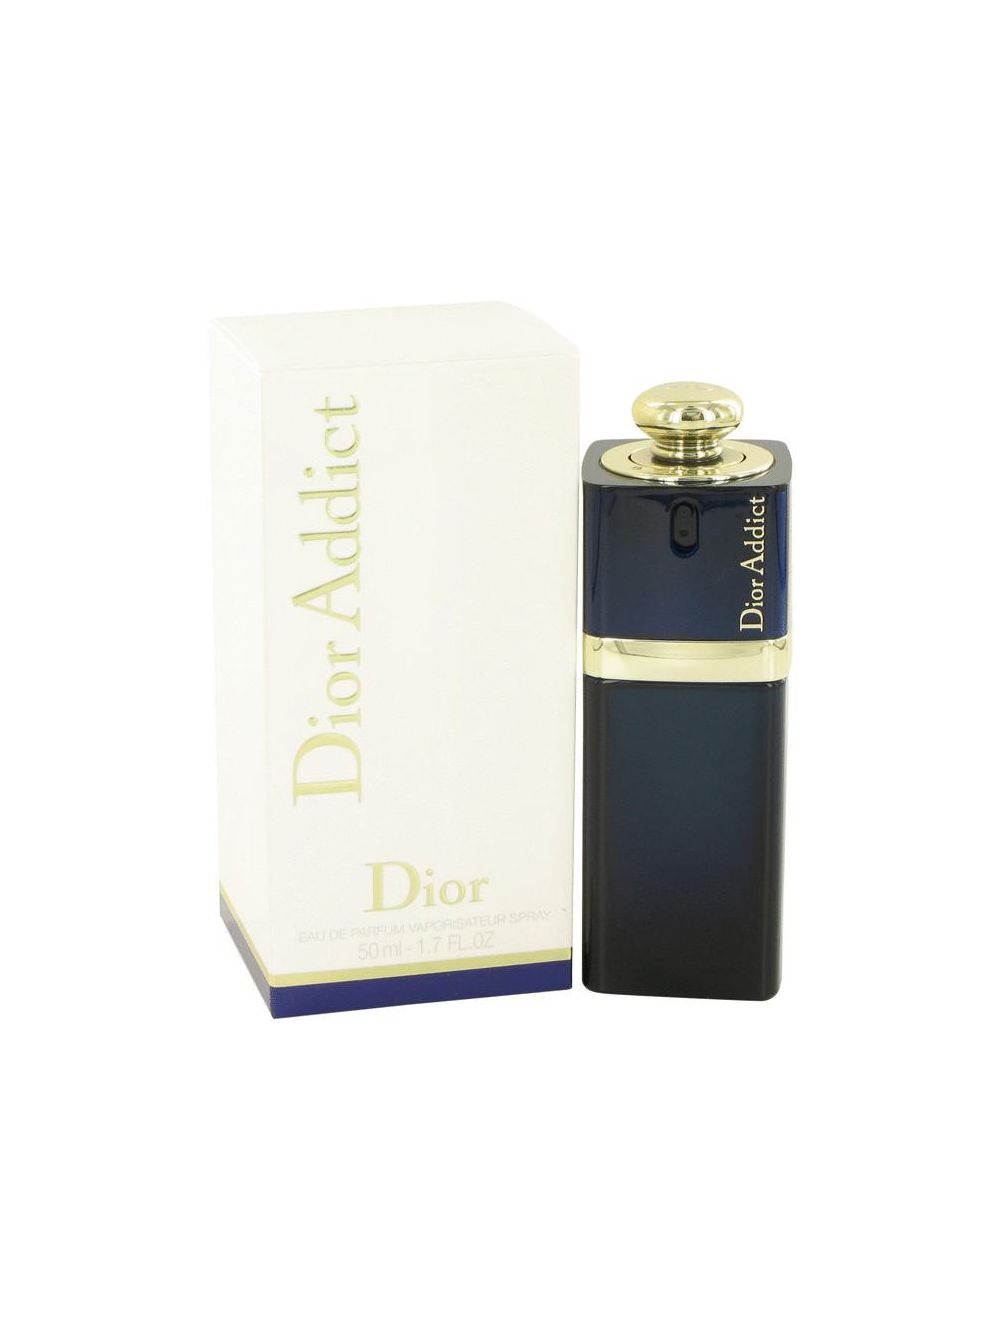 Dior Eau De Parfum 1.7 oz / 50 ml for Women